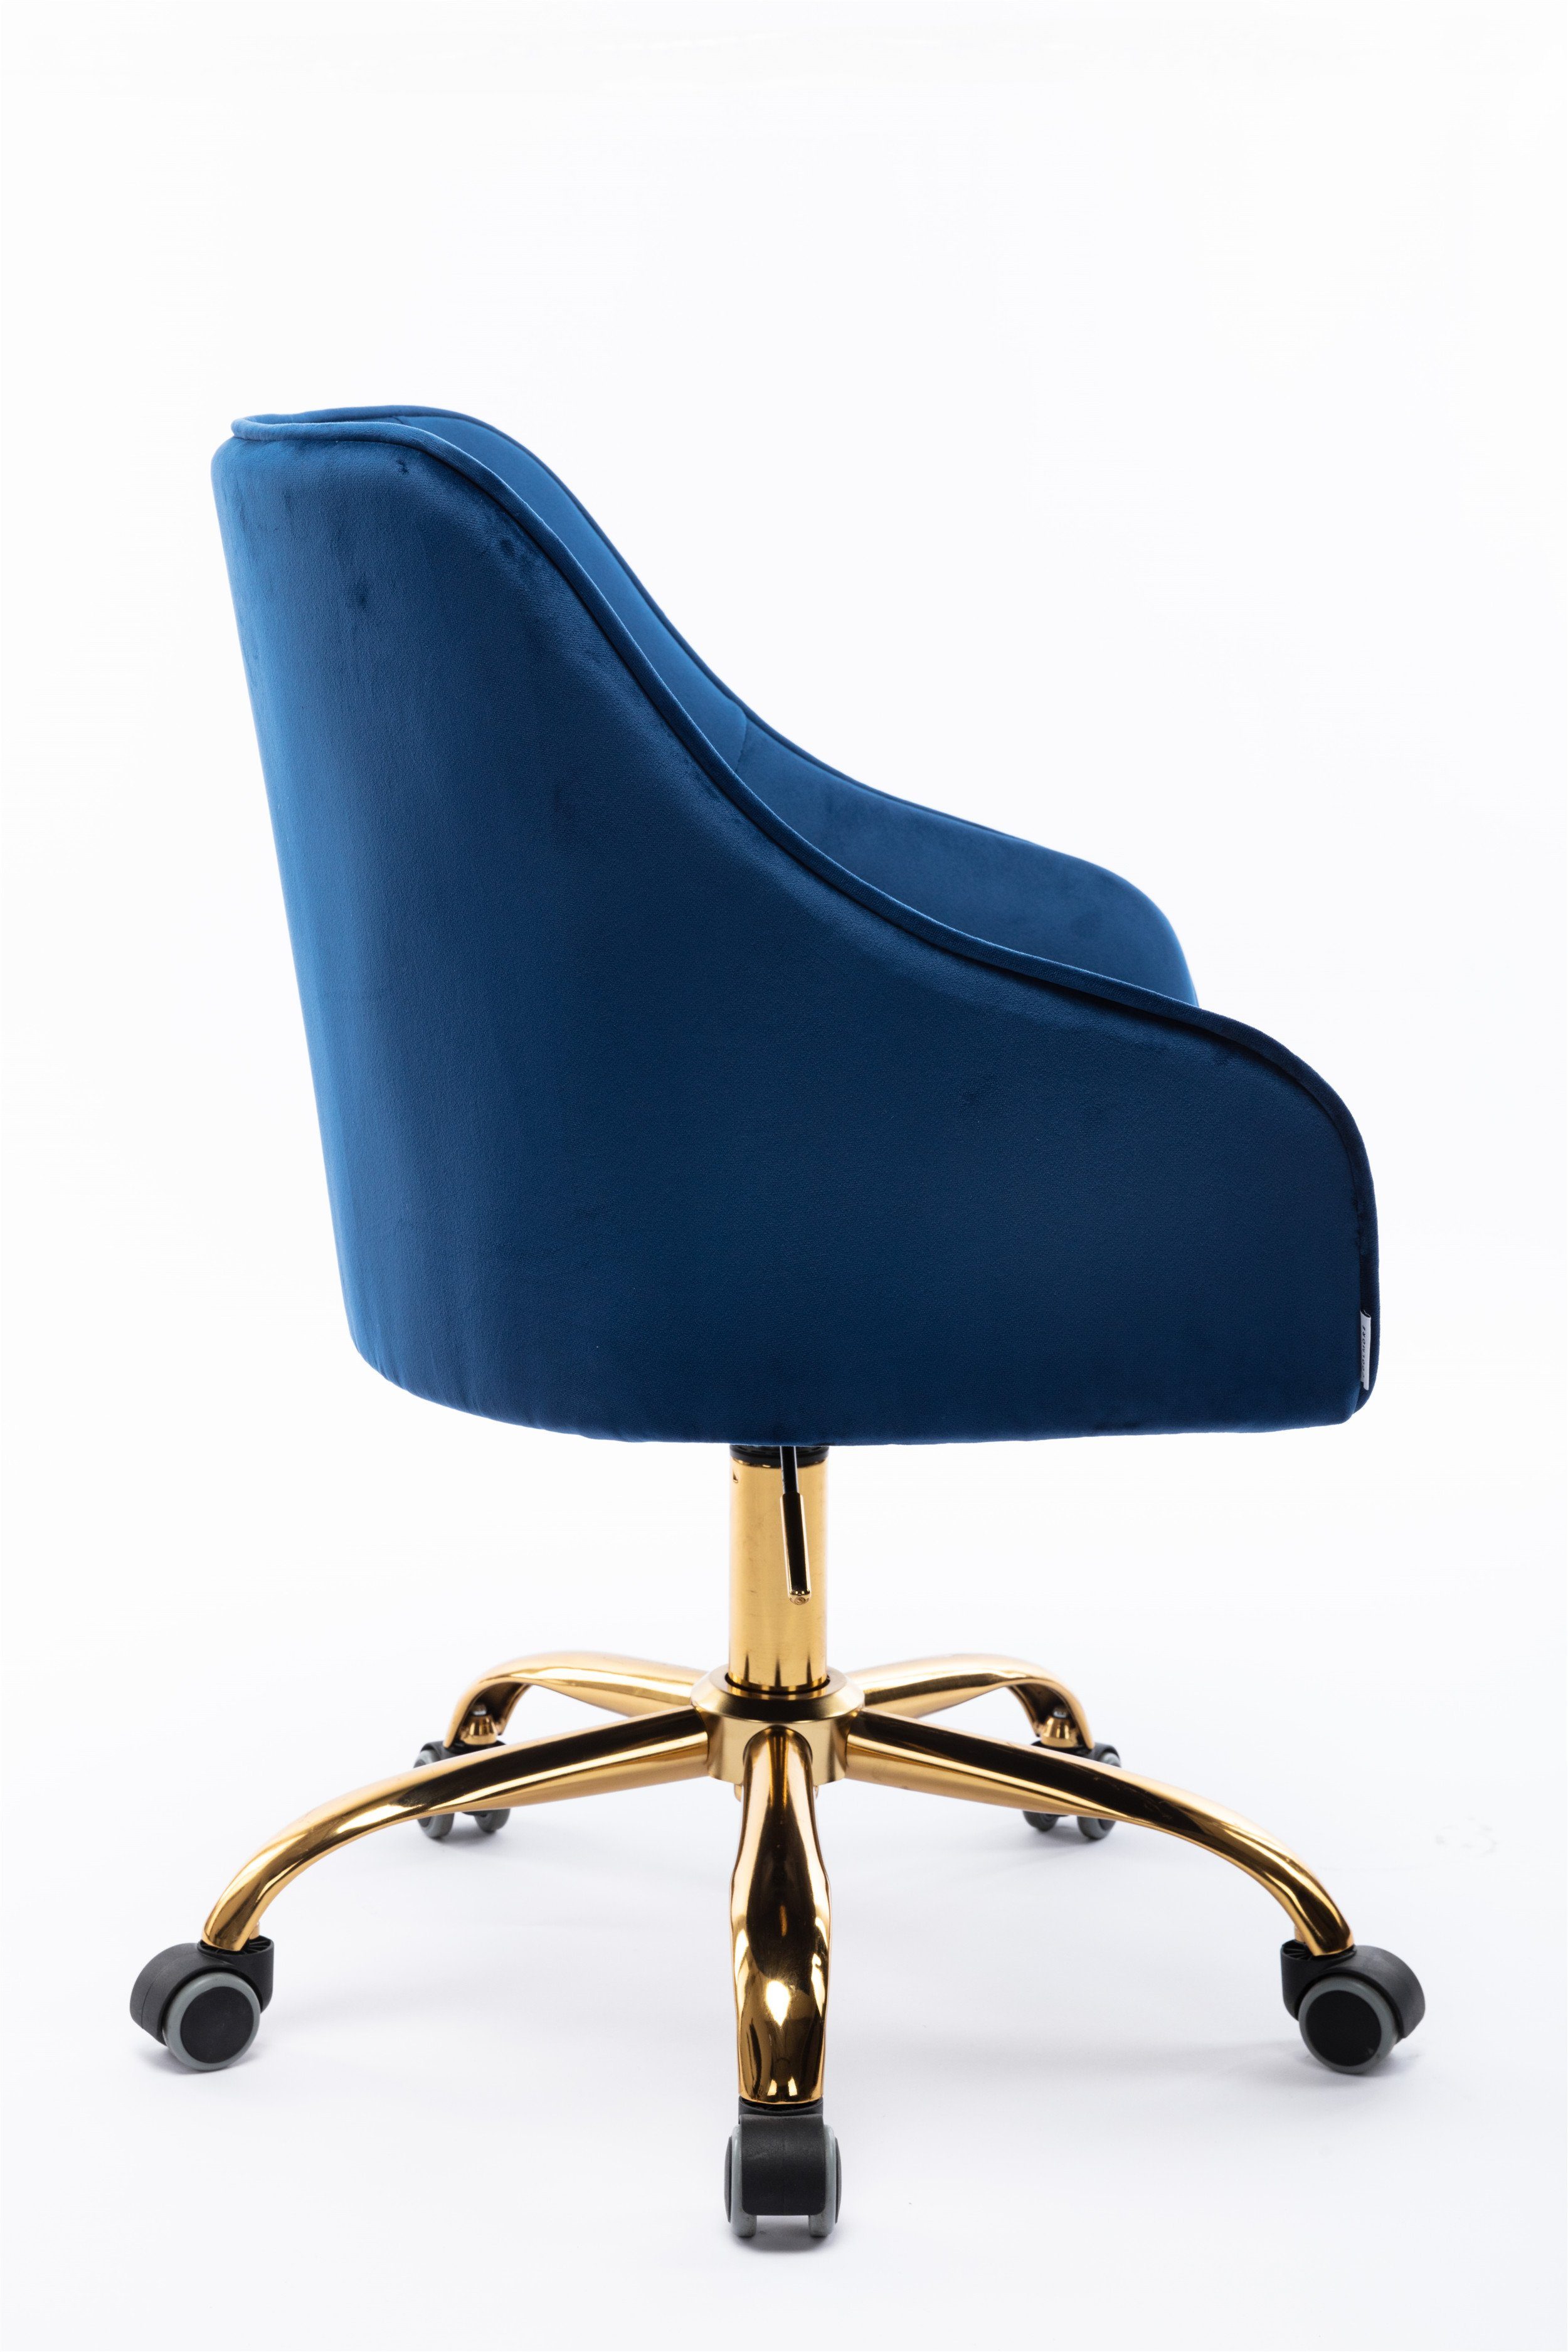 St), Basis aus (1 goldfarbener gepolstert Navy Drehstuhl mit Bürostuhl, Samt, Bürostuhl Schreibtischstuhl höhenverstellbar Merax